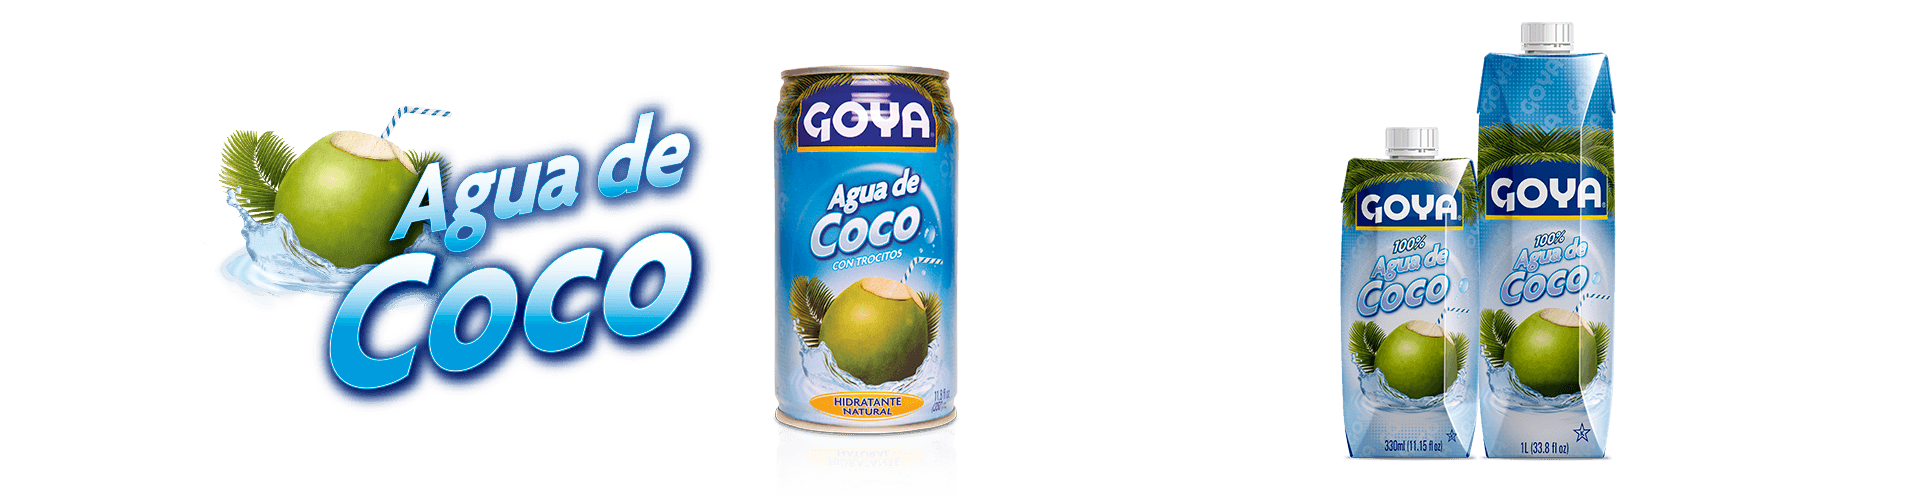 Agua de coco Goya